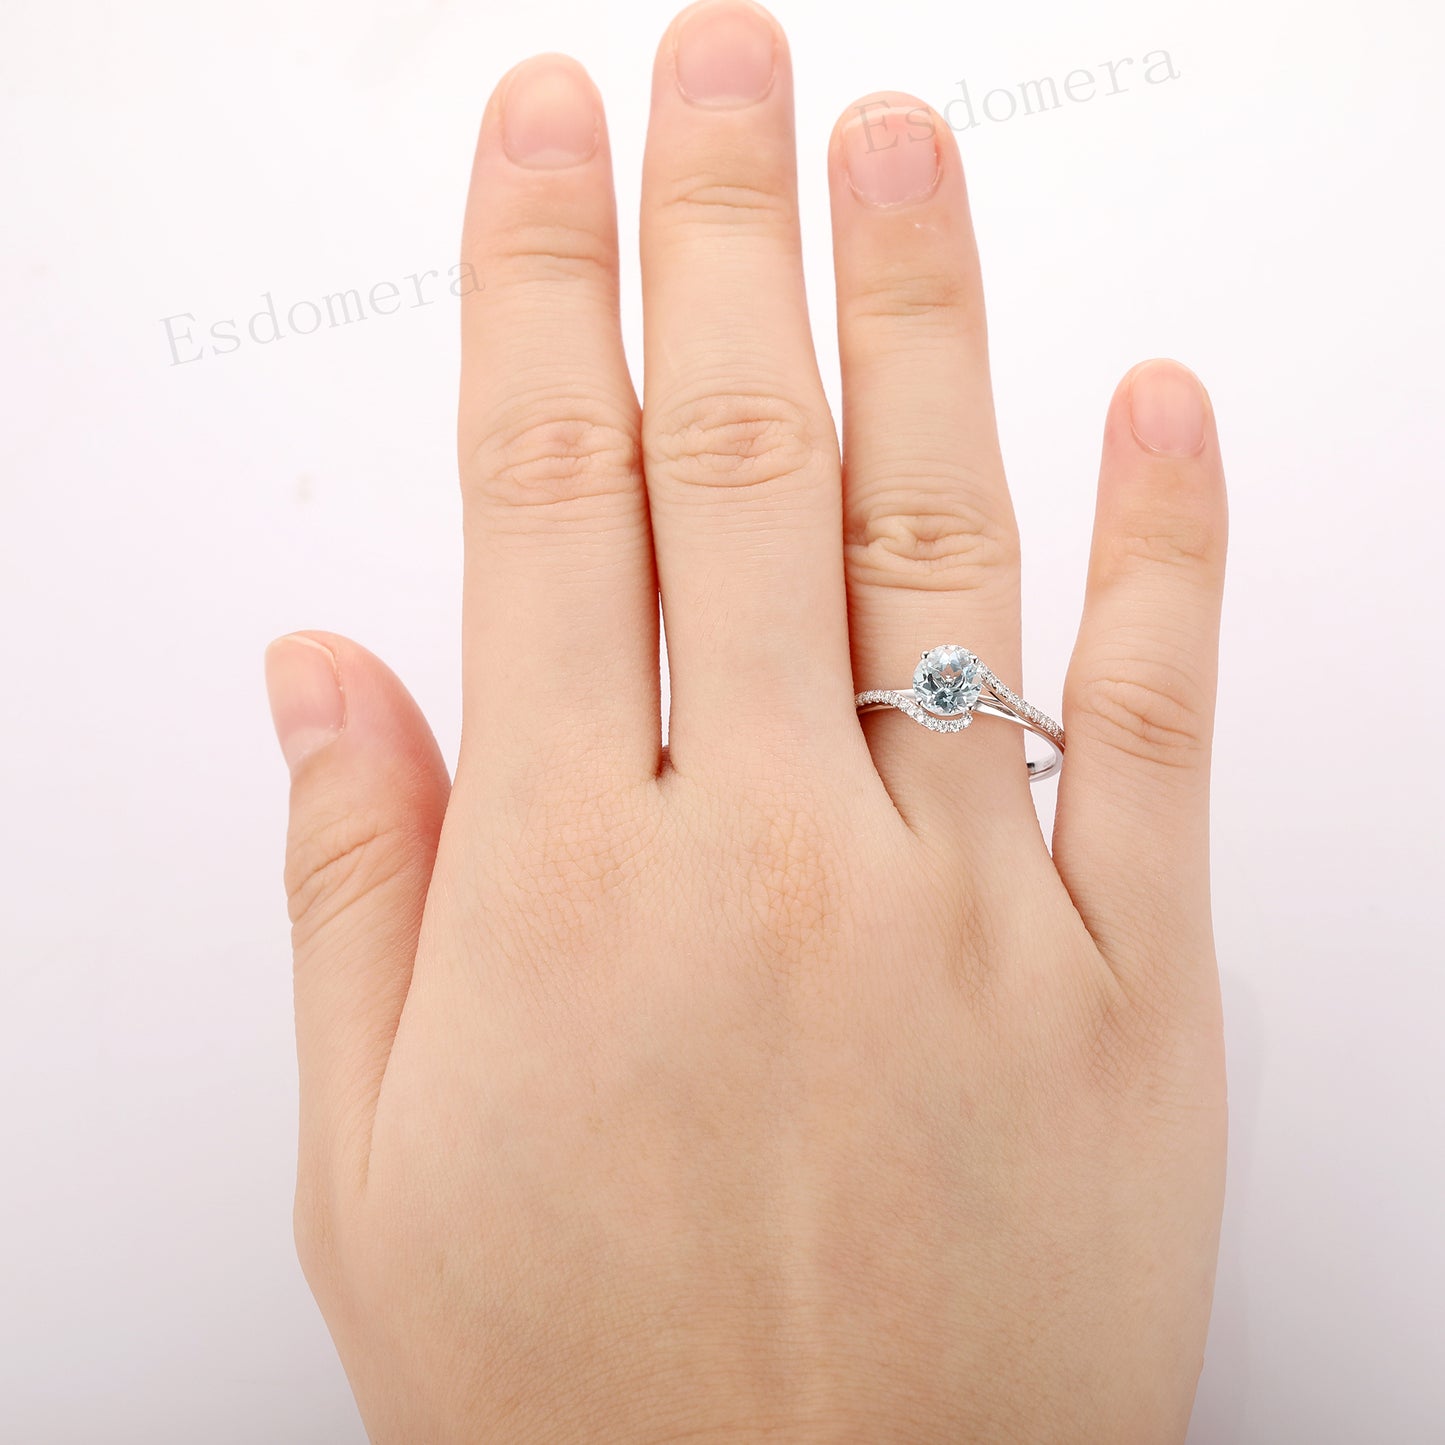 Aquamarine Ring, Round Cut 6.5mm Aquamarine Ring, Pave Set Accents Ring, 14k Rose Gold Engagement Ring